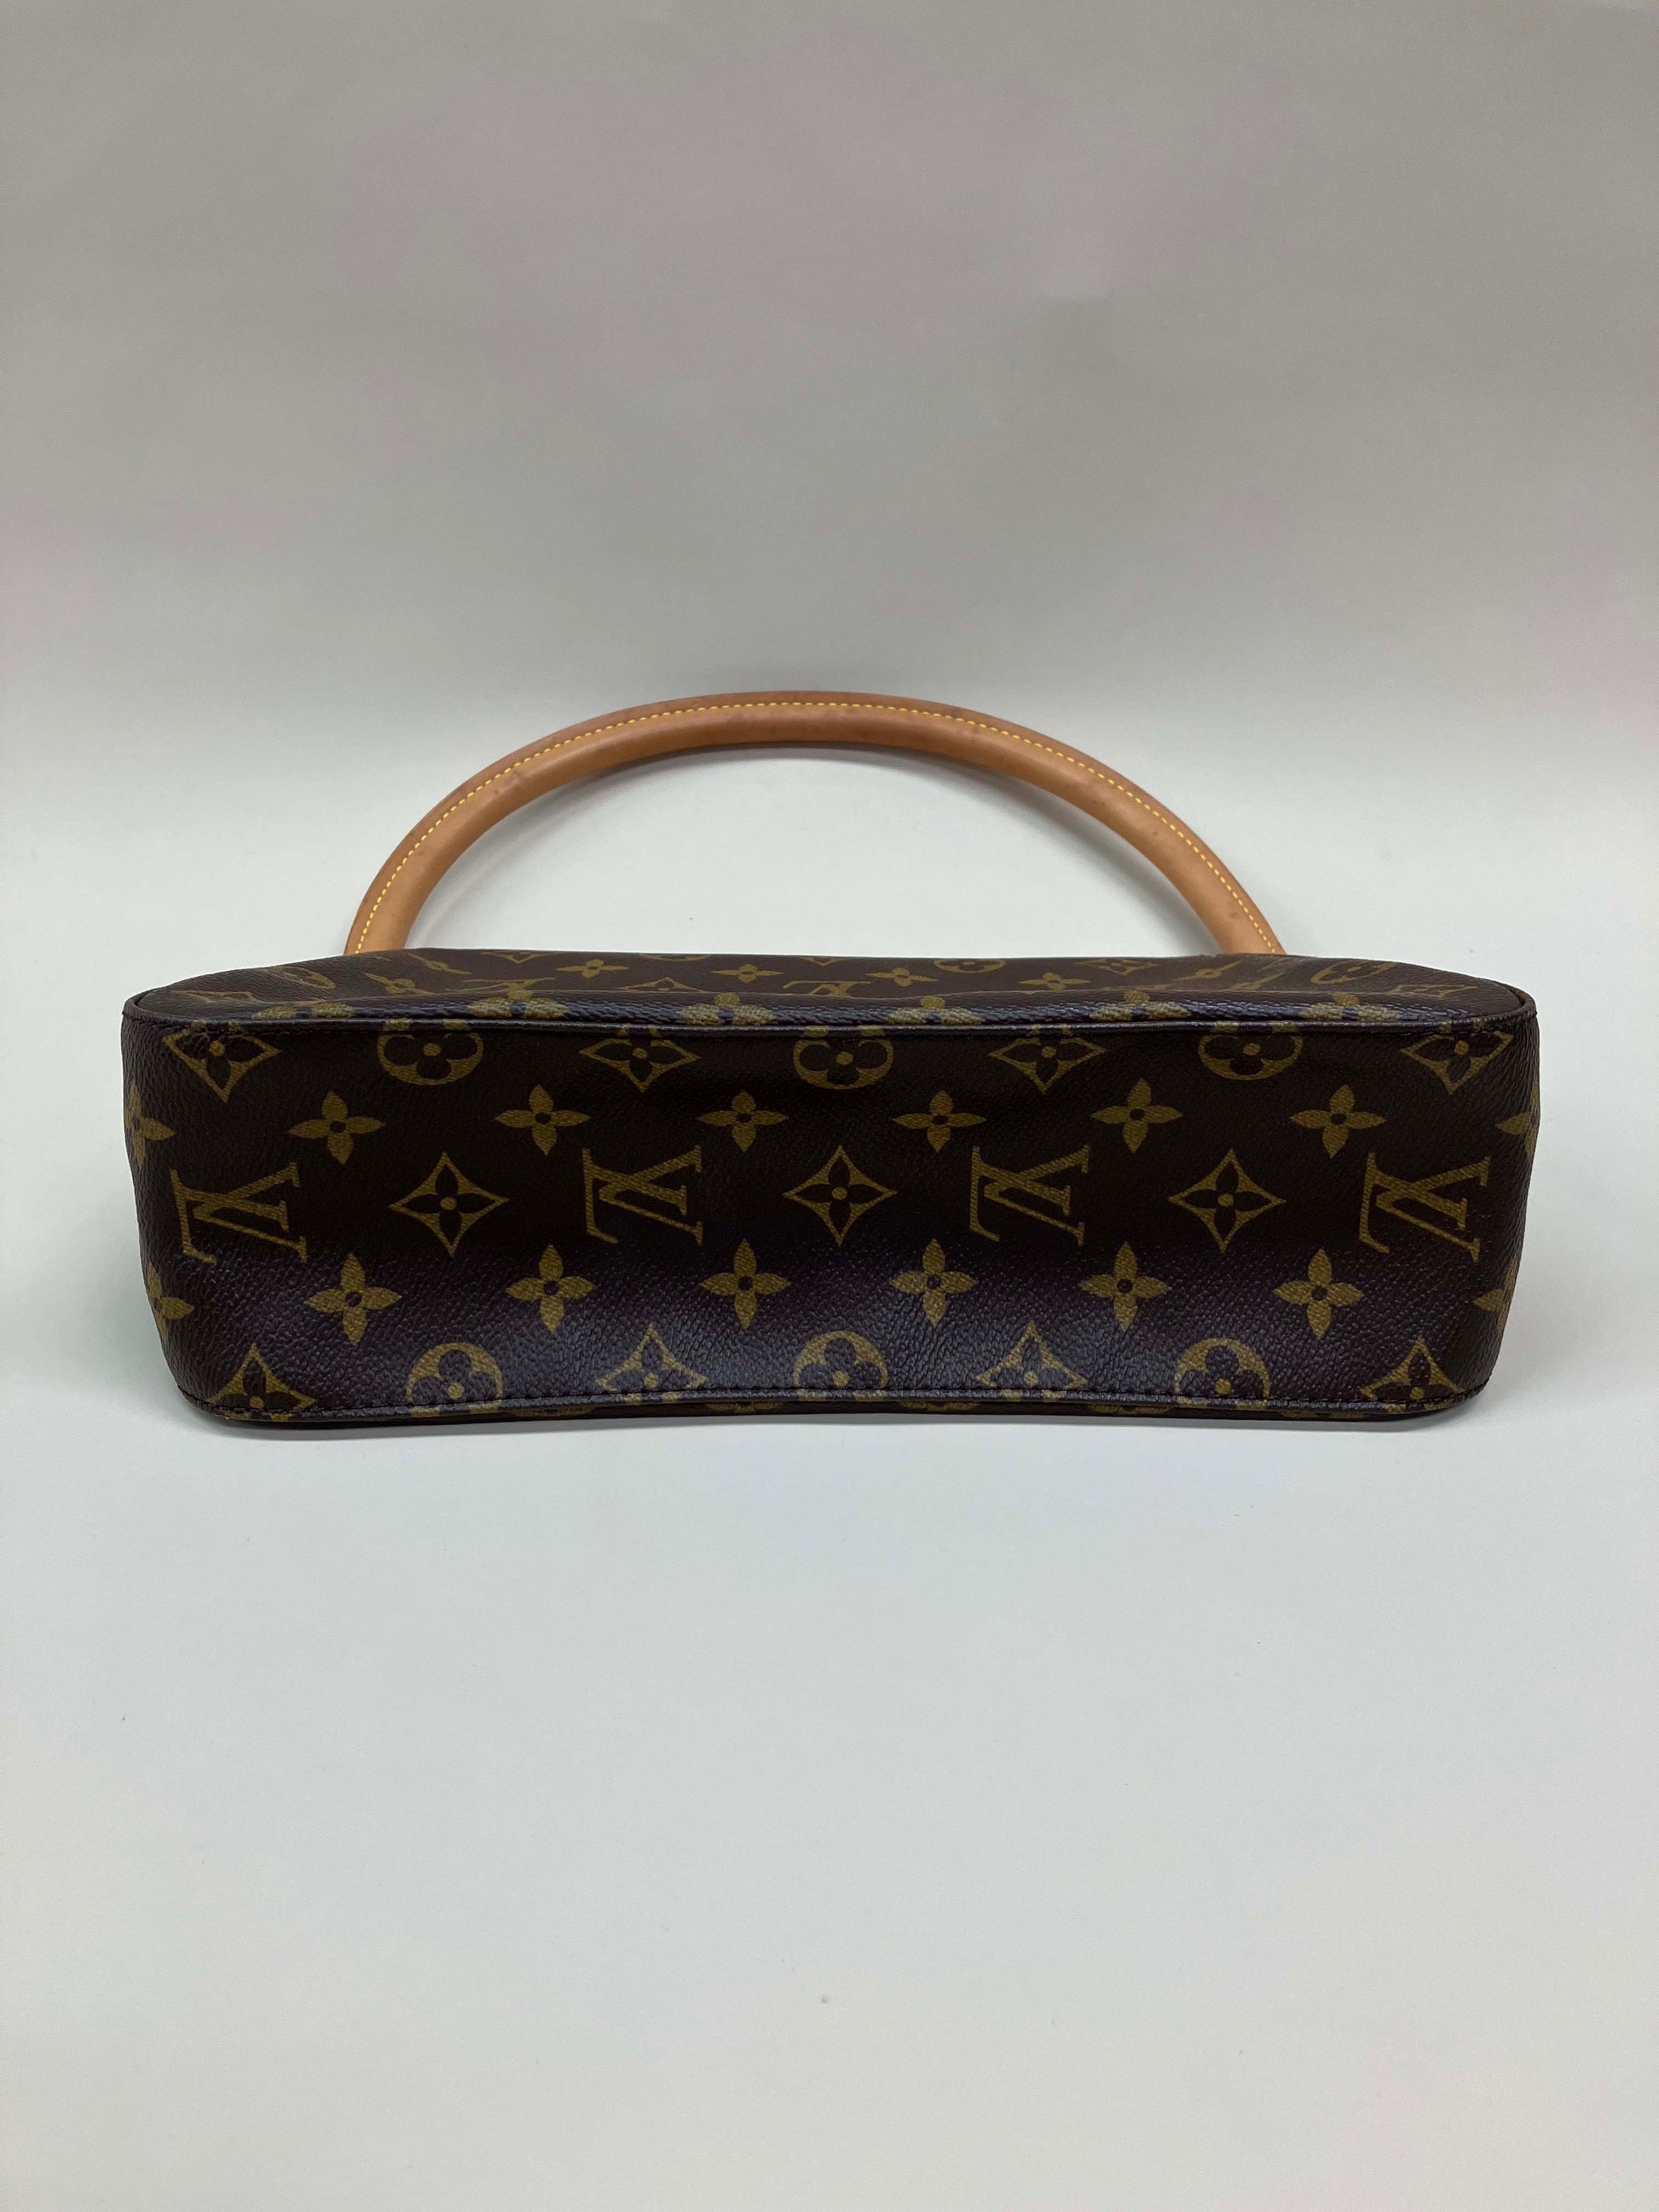 Louis Vuitton Mini LOOPING handbag Brown, Monogram M51147